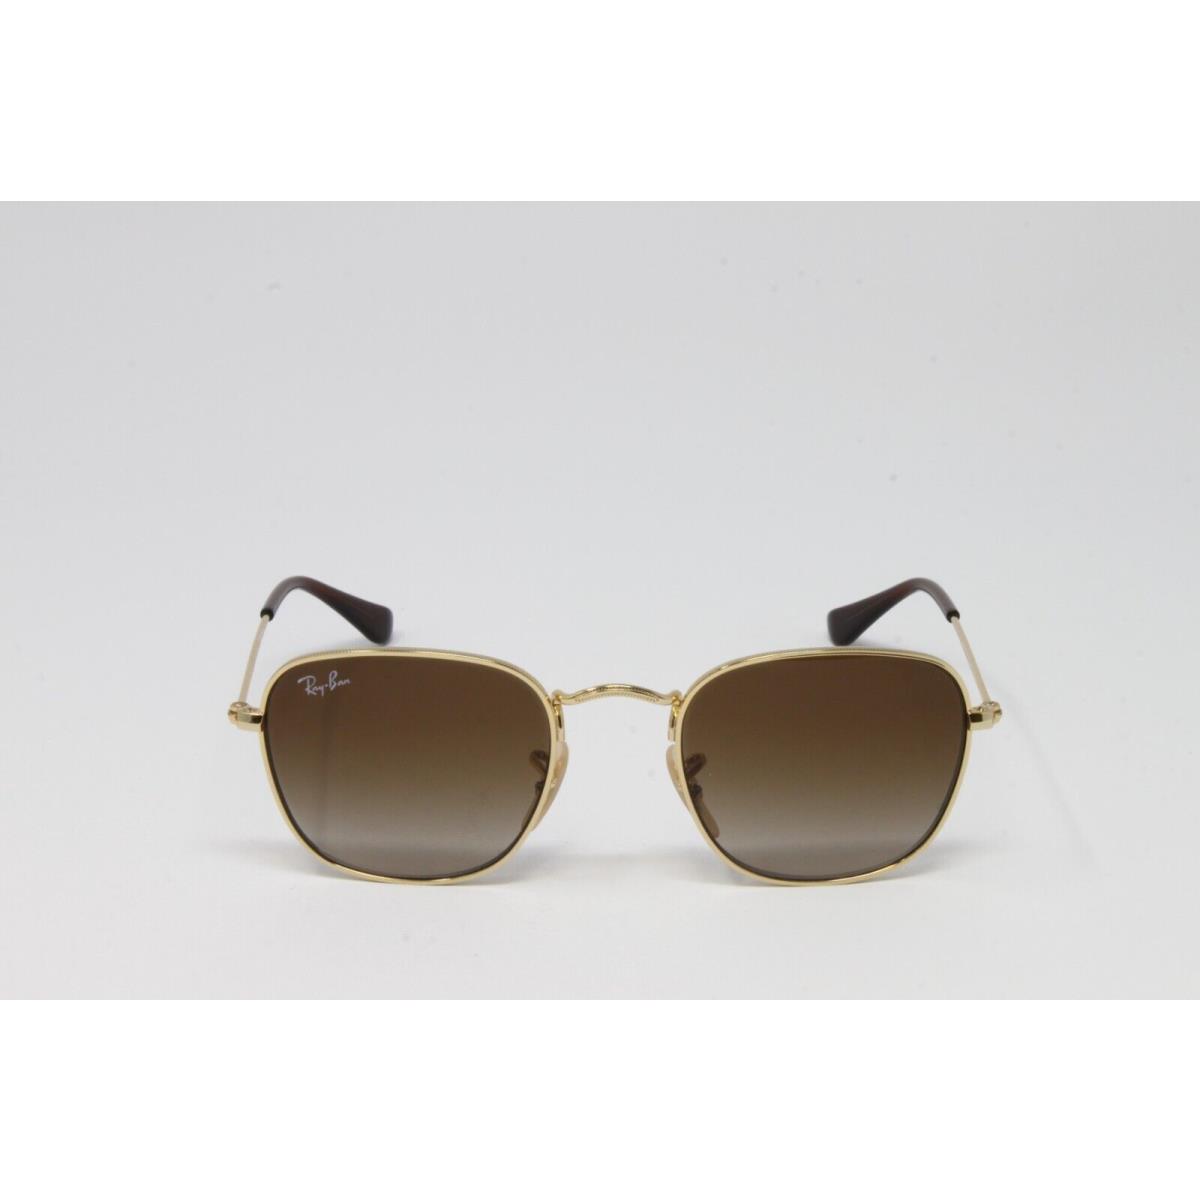 Ray-Ban sunglasses  - Gold Frame, Brown Lens